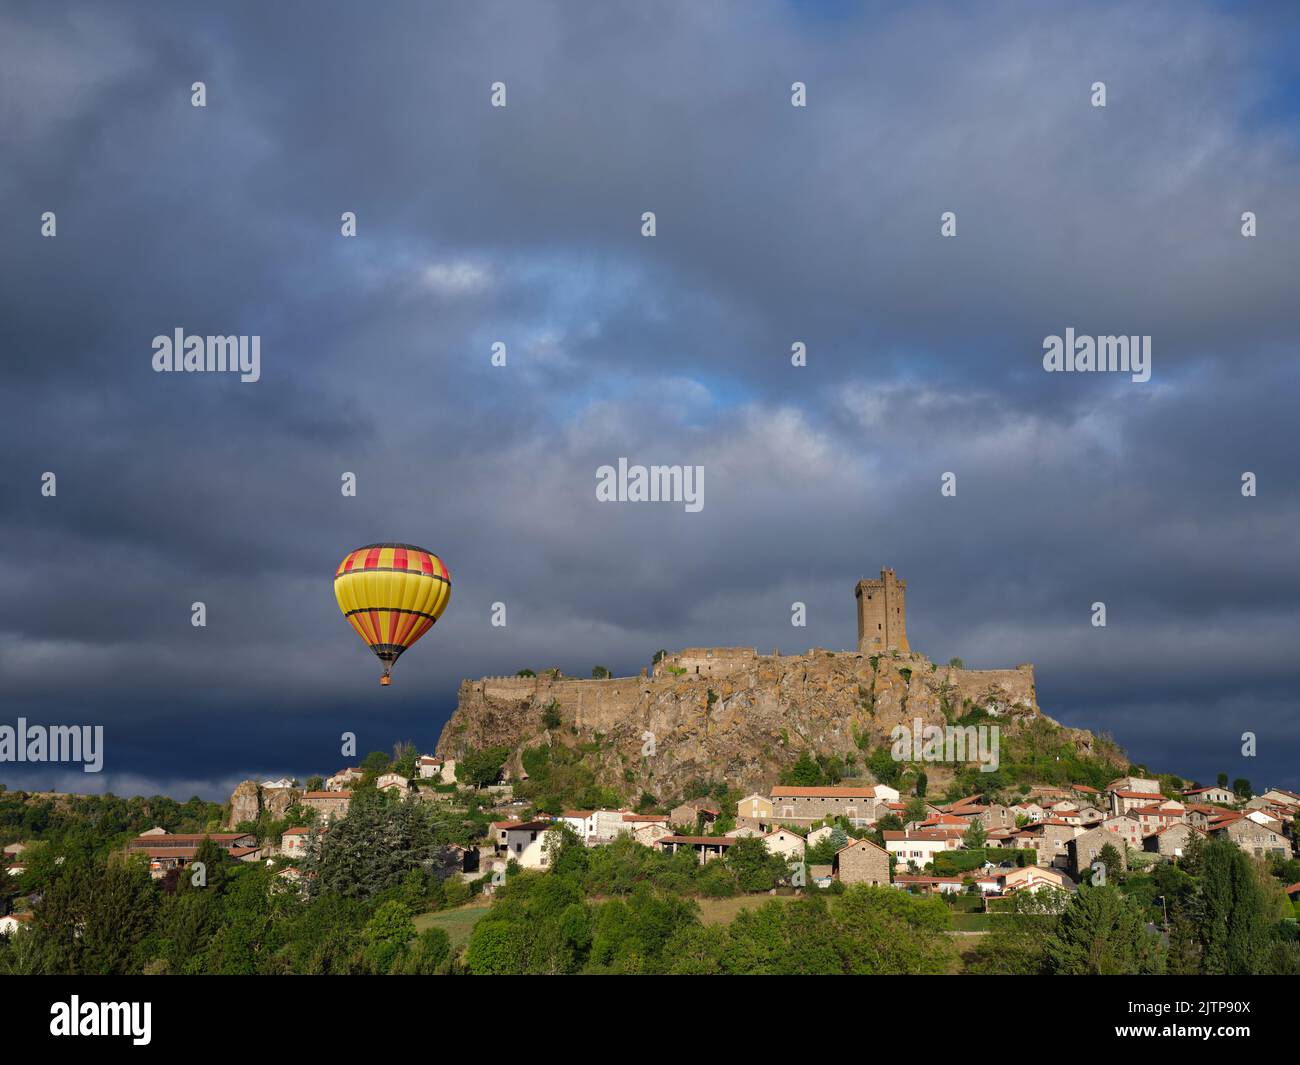 Hot air balloon drifting near a medieval fortress on a volcanic mesa. Polignac, Haute-Loire, Auvergne-Rhône-Alpes, France. Stock Photo